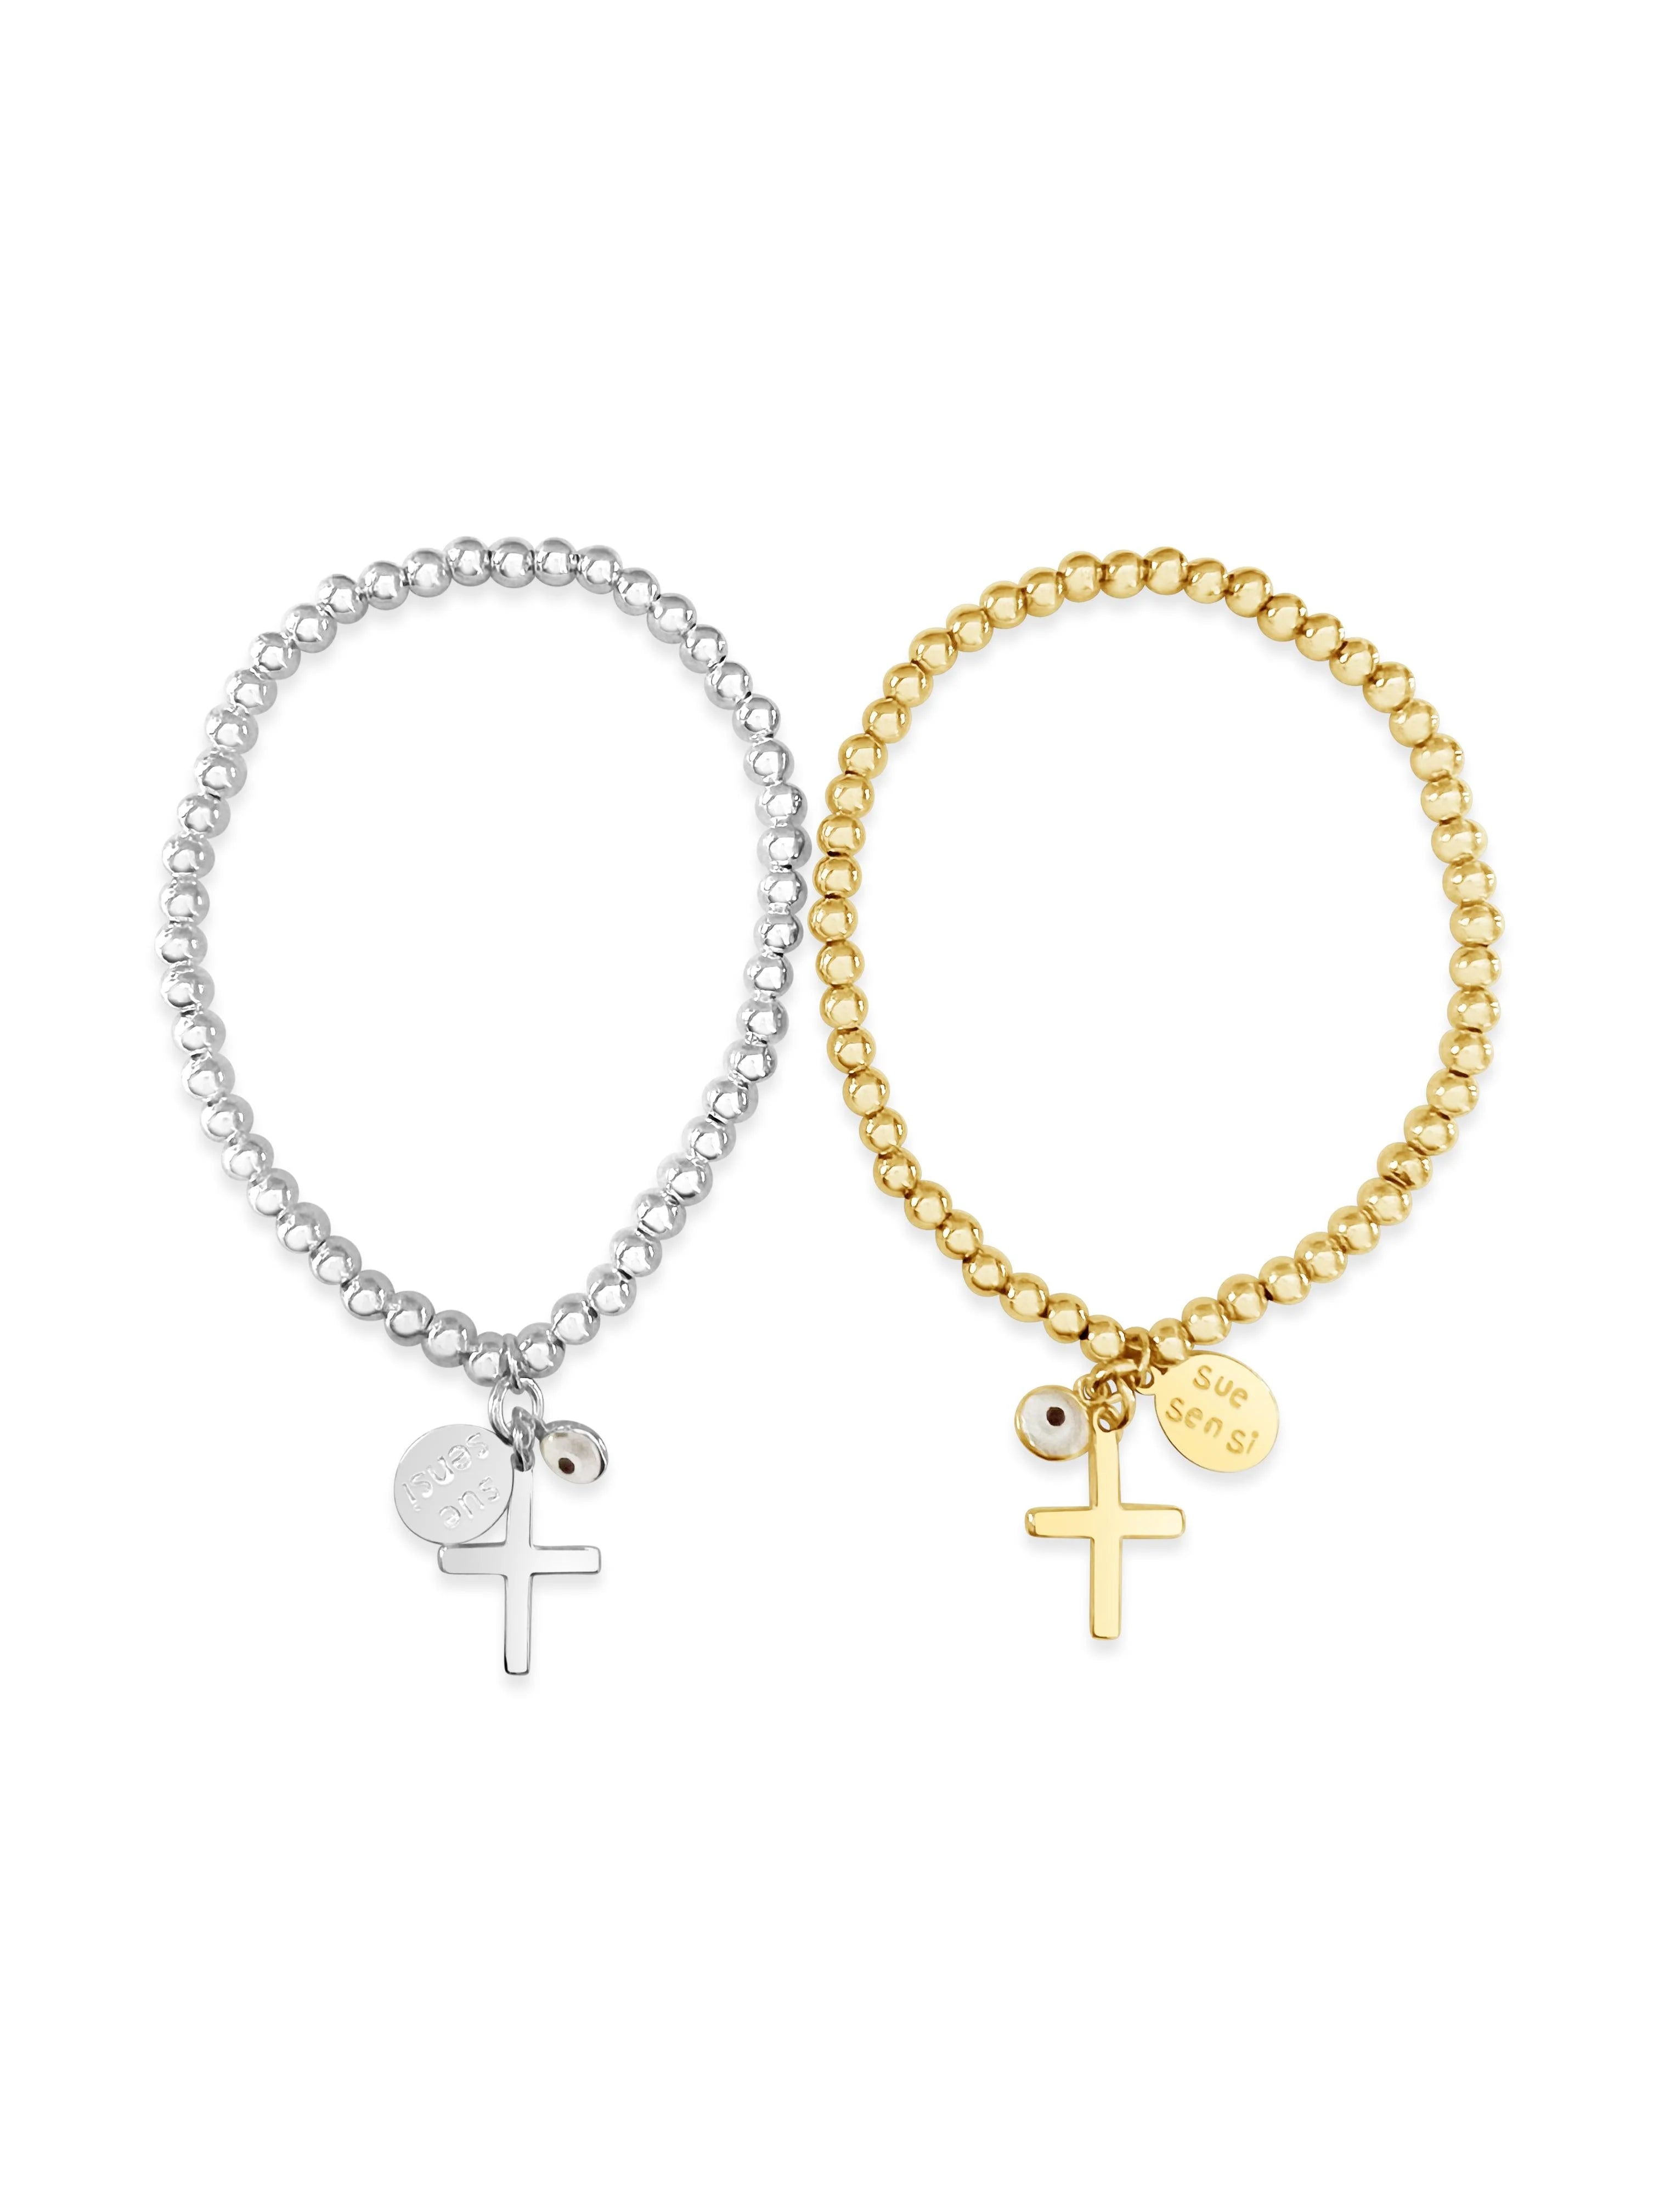 Sue Sensi Faith & More Bracelet